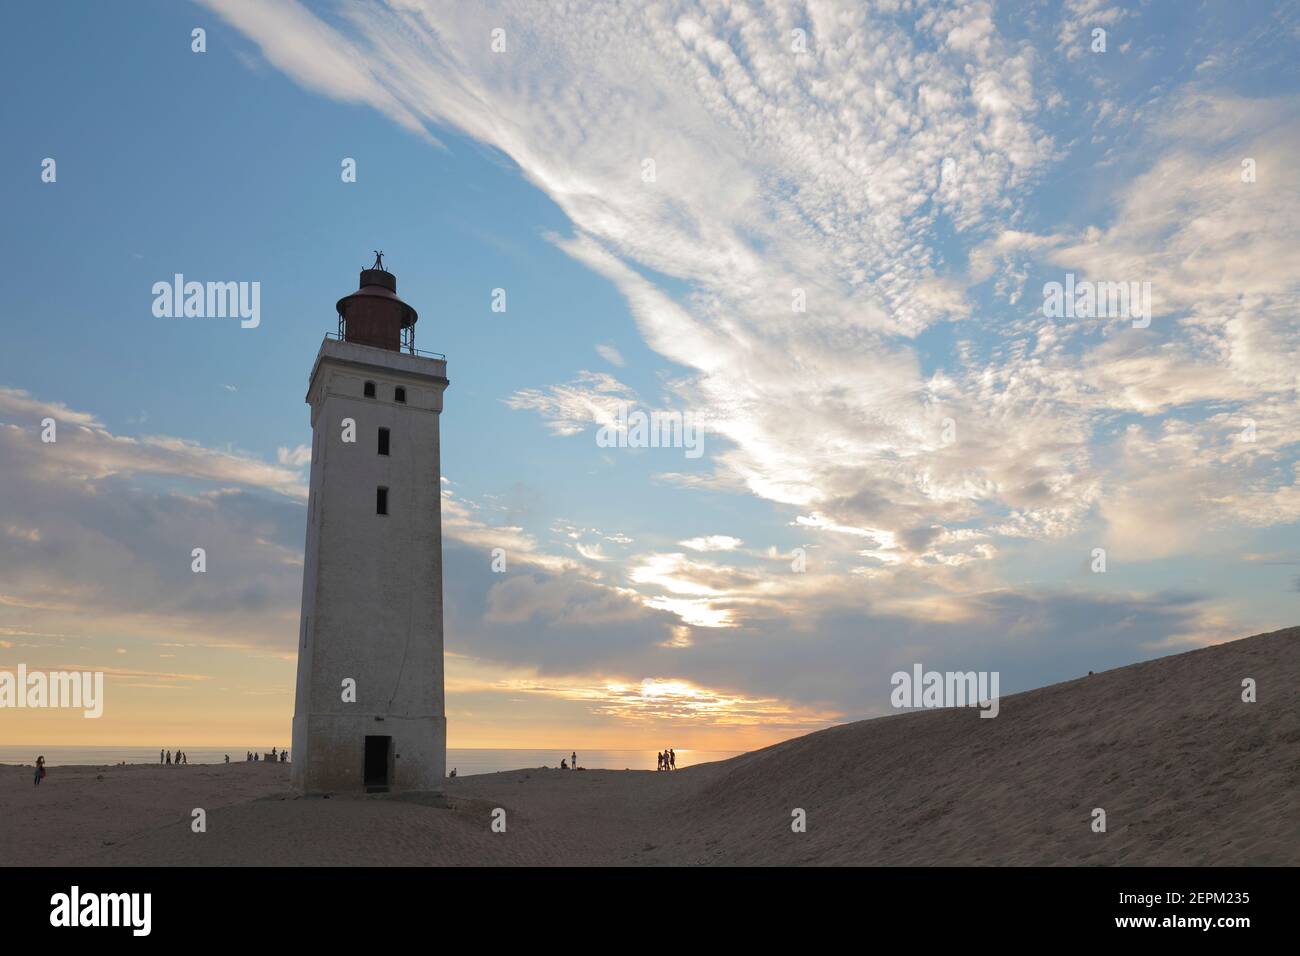 Sonnenuntergang mit flauschigen Wolken (Zirruswolken) am Leuchtturm Rubjerg Knude, Dänemark; Rubjerg Knude Fyr an der Jammerbugten Küste; Dänemark Stockfoto